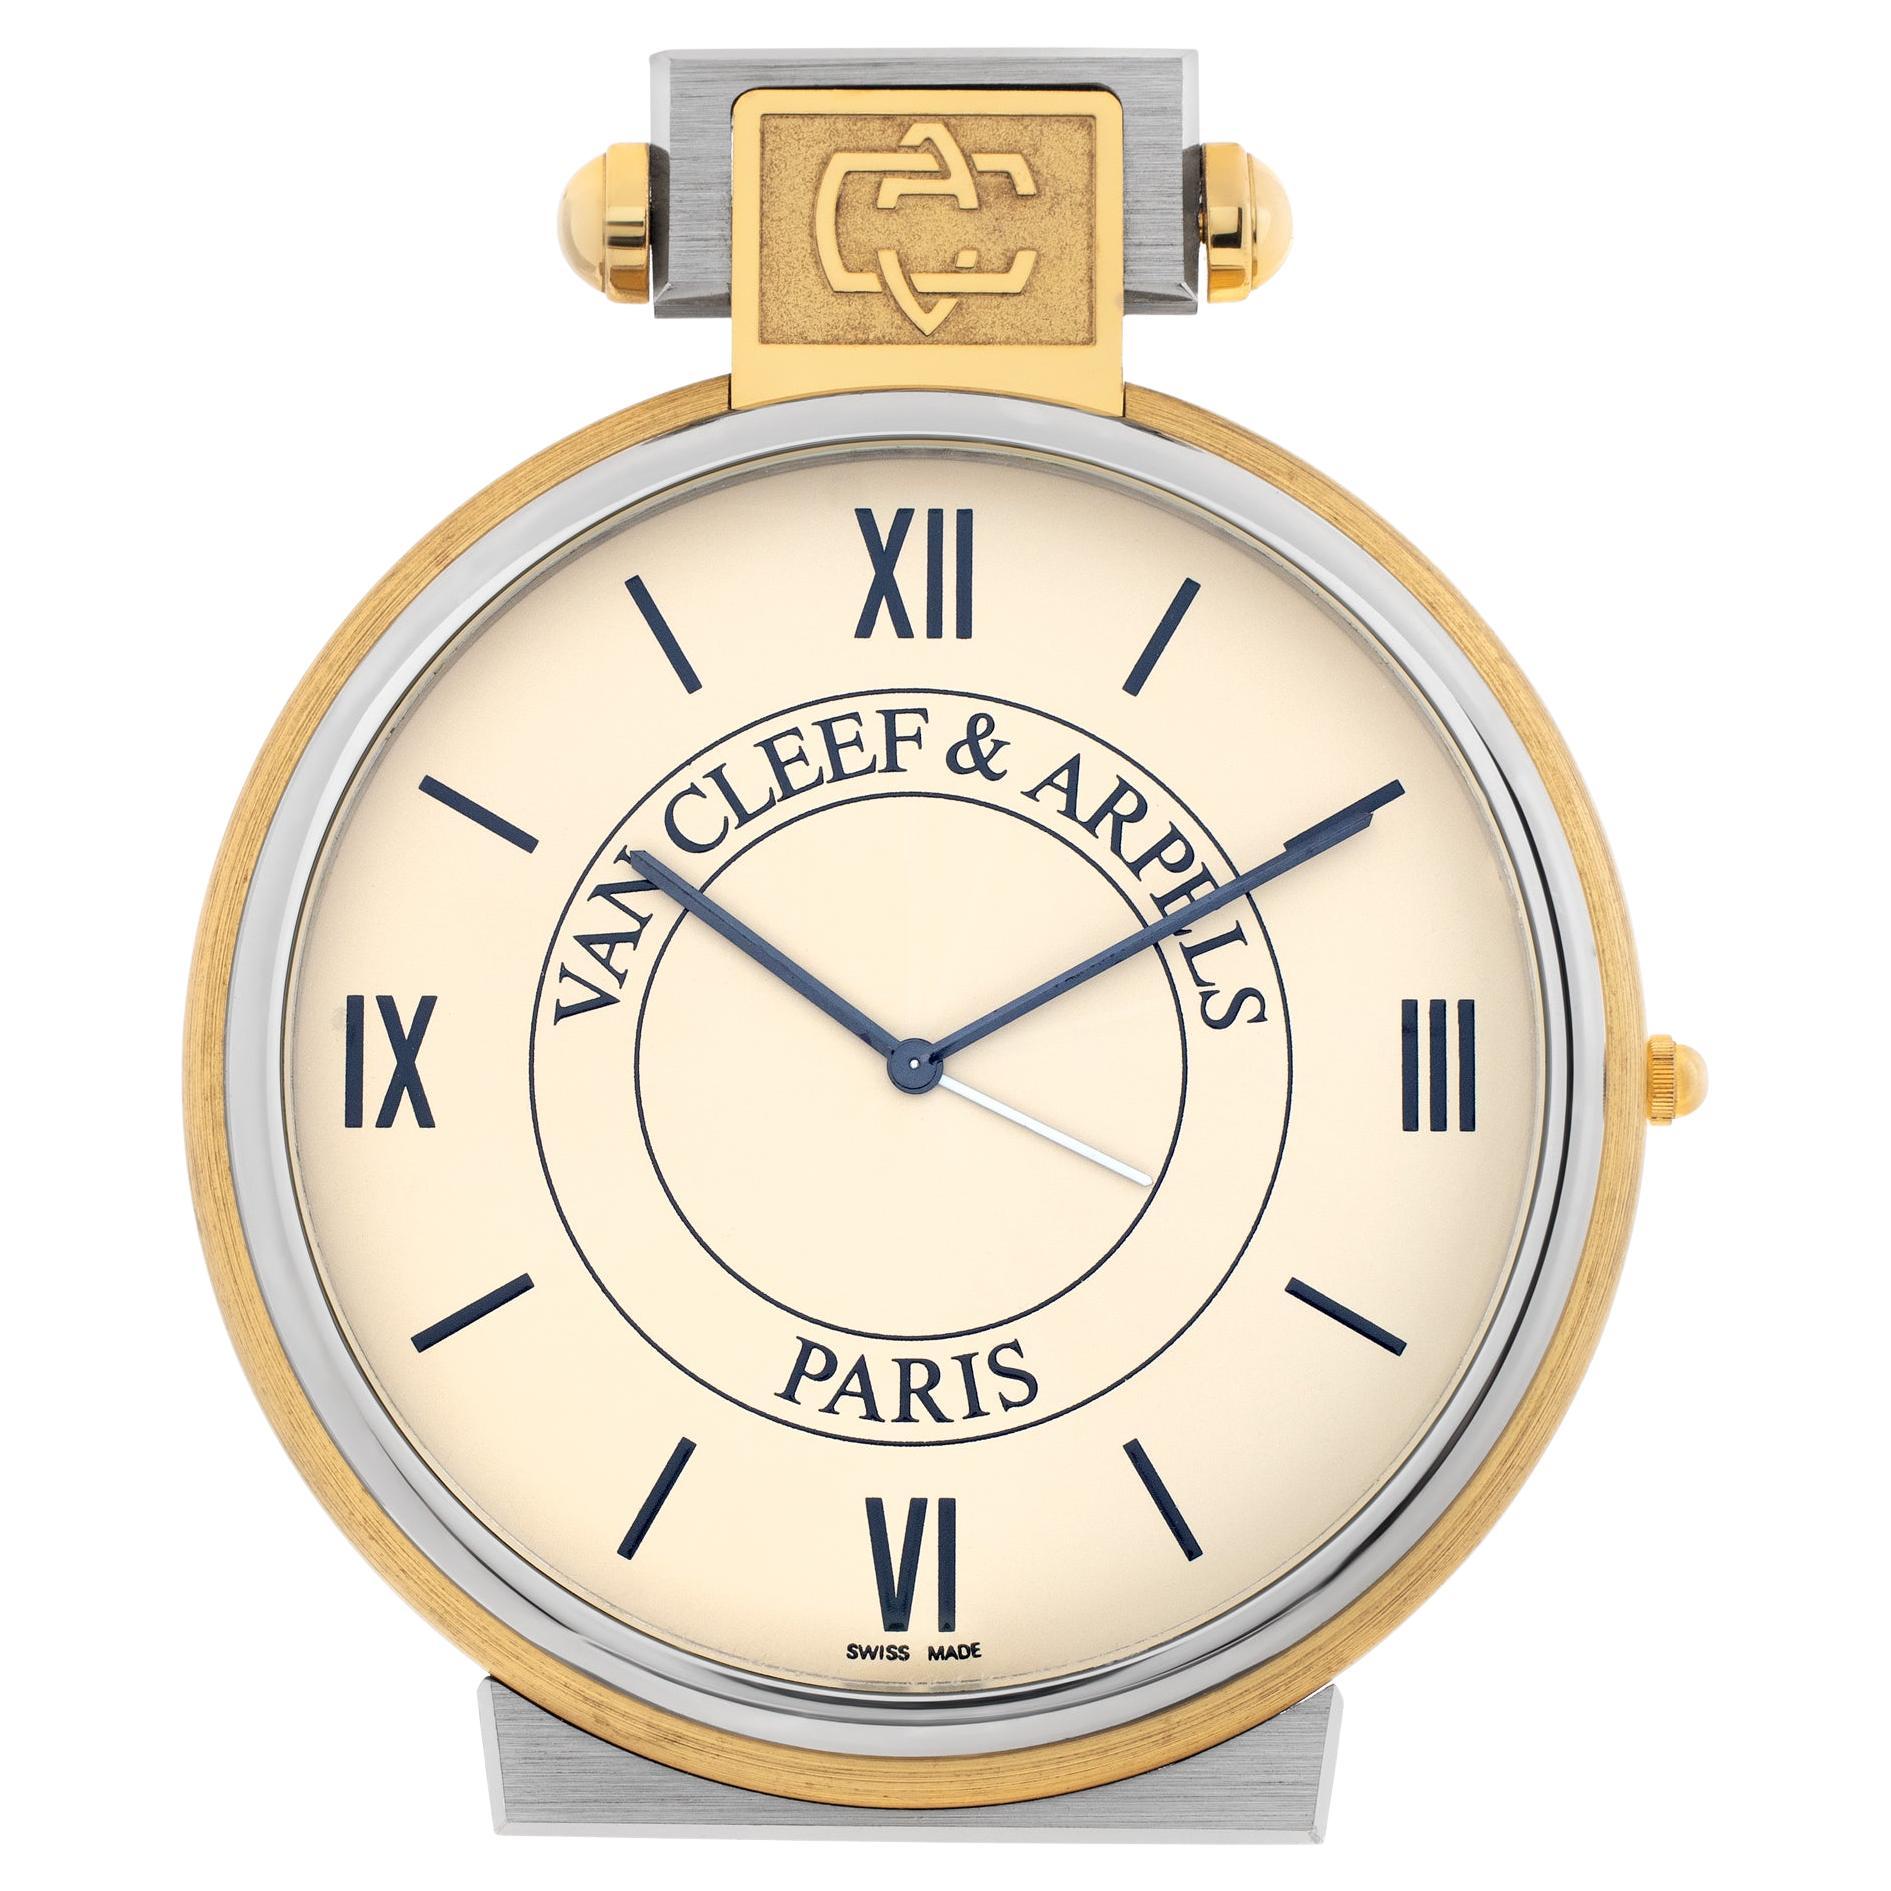 Van Cleef & Arpels Desk Clock 820.P06 Quartz Watch Gold & Stainless Steel